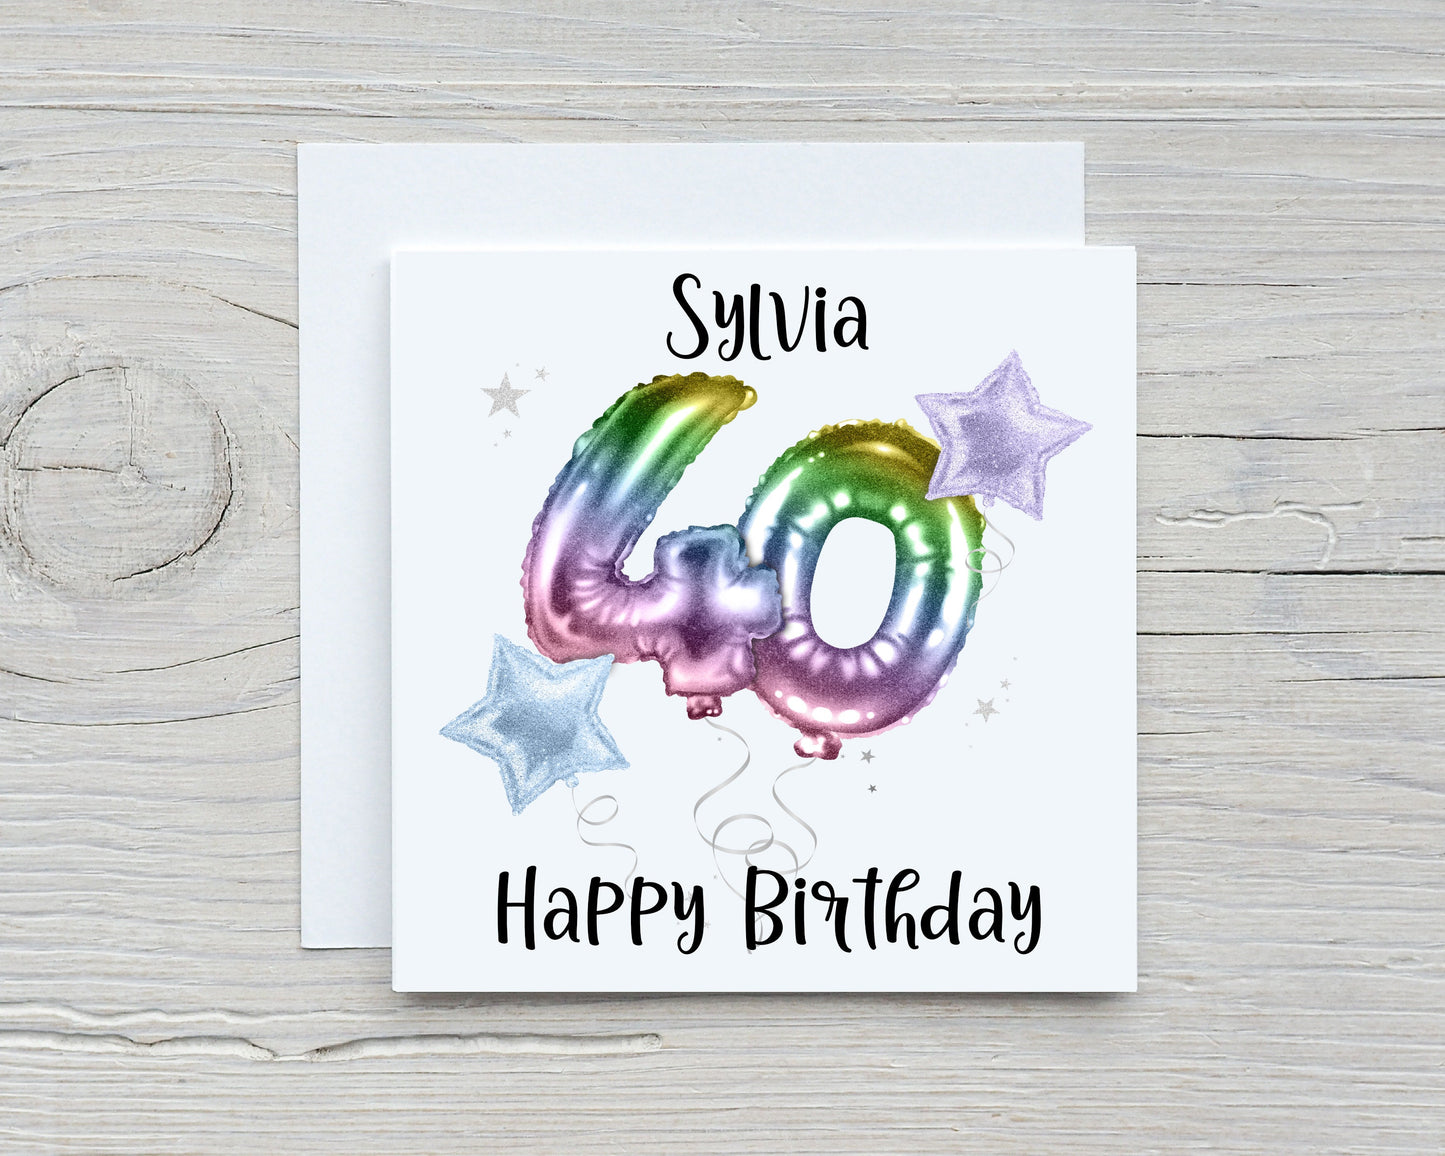 80 Birthday Card, Personalised Balloon Birthday Card, 40 Birthday, 50 Birthday, 60 Birthday, 70 Birthday, 90 Birthday. Any Age Card